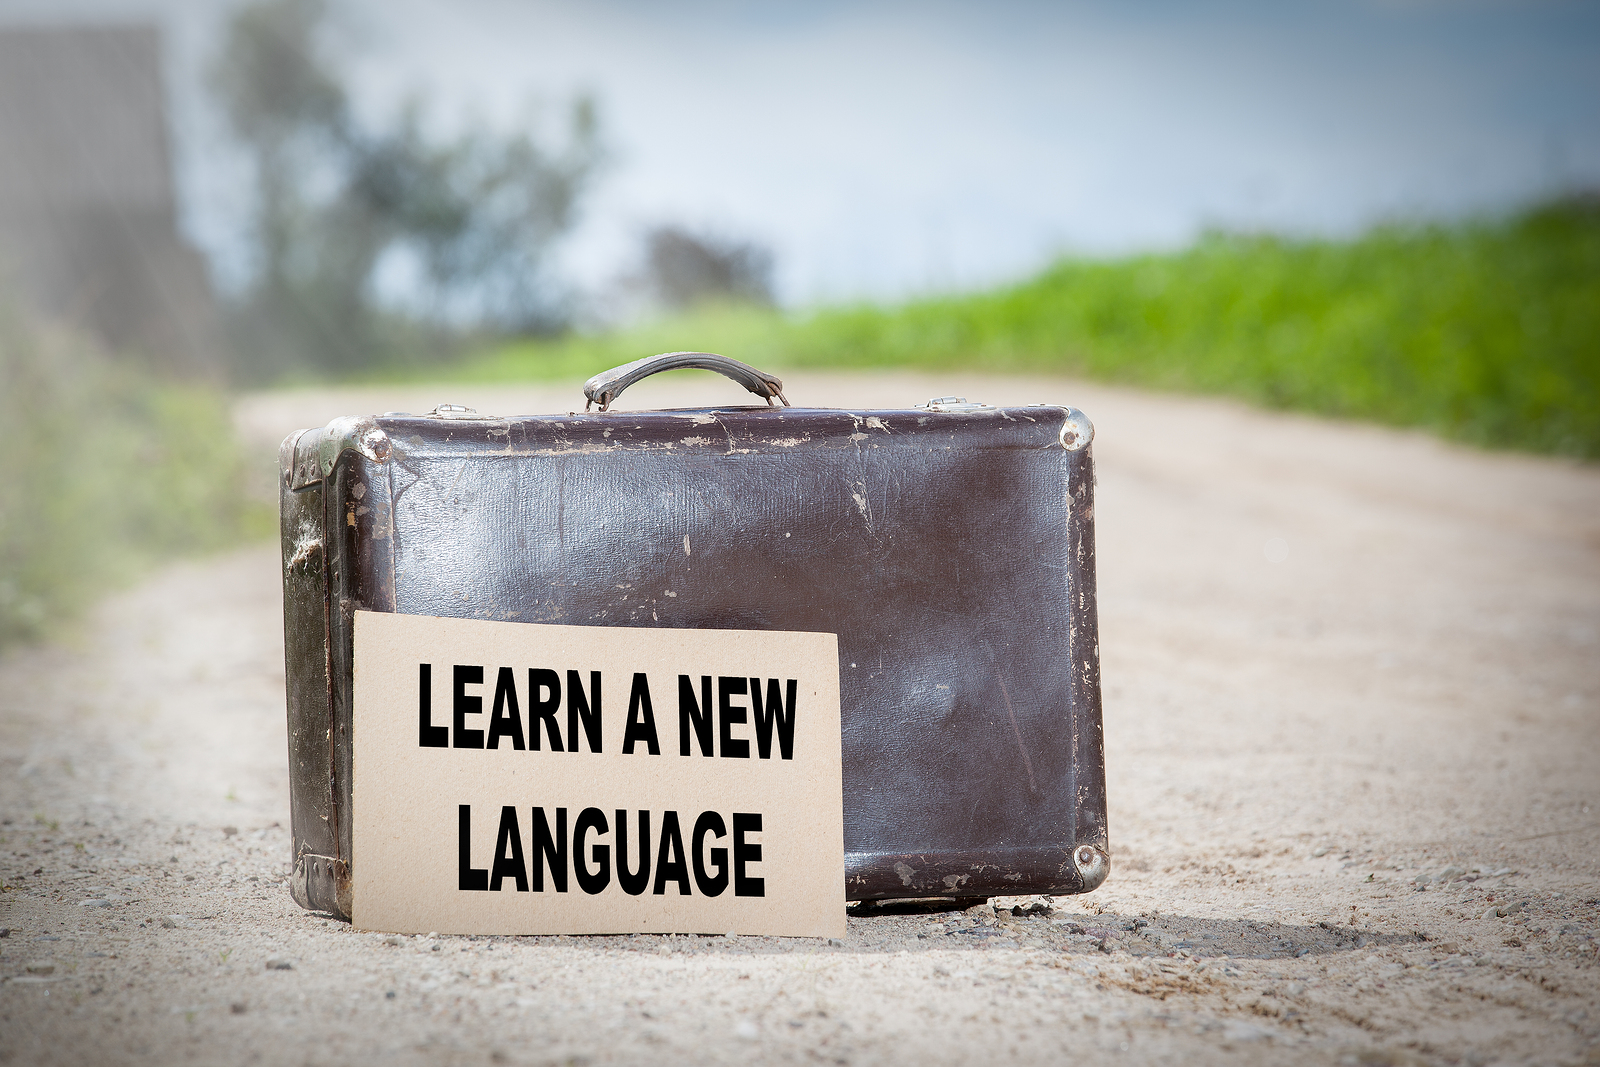 bigstock-Learn a new language-170517701